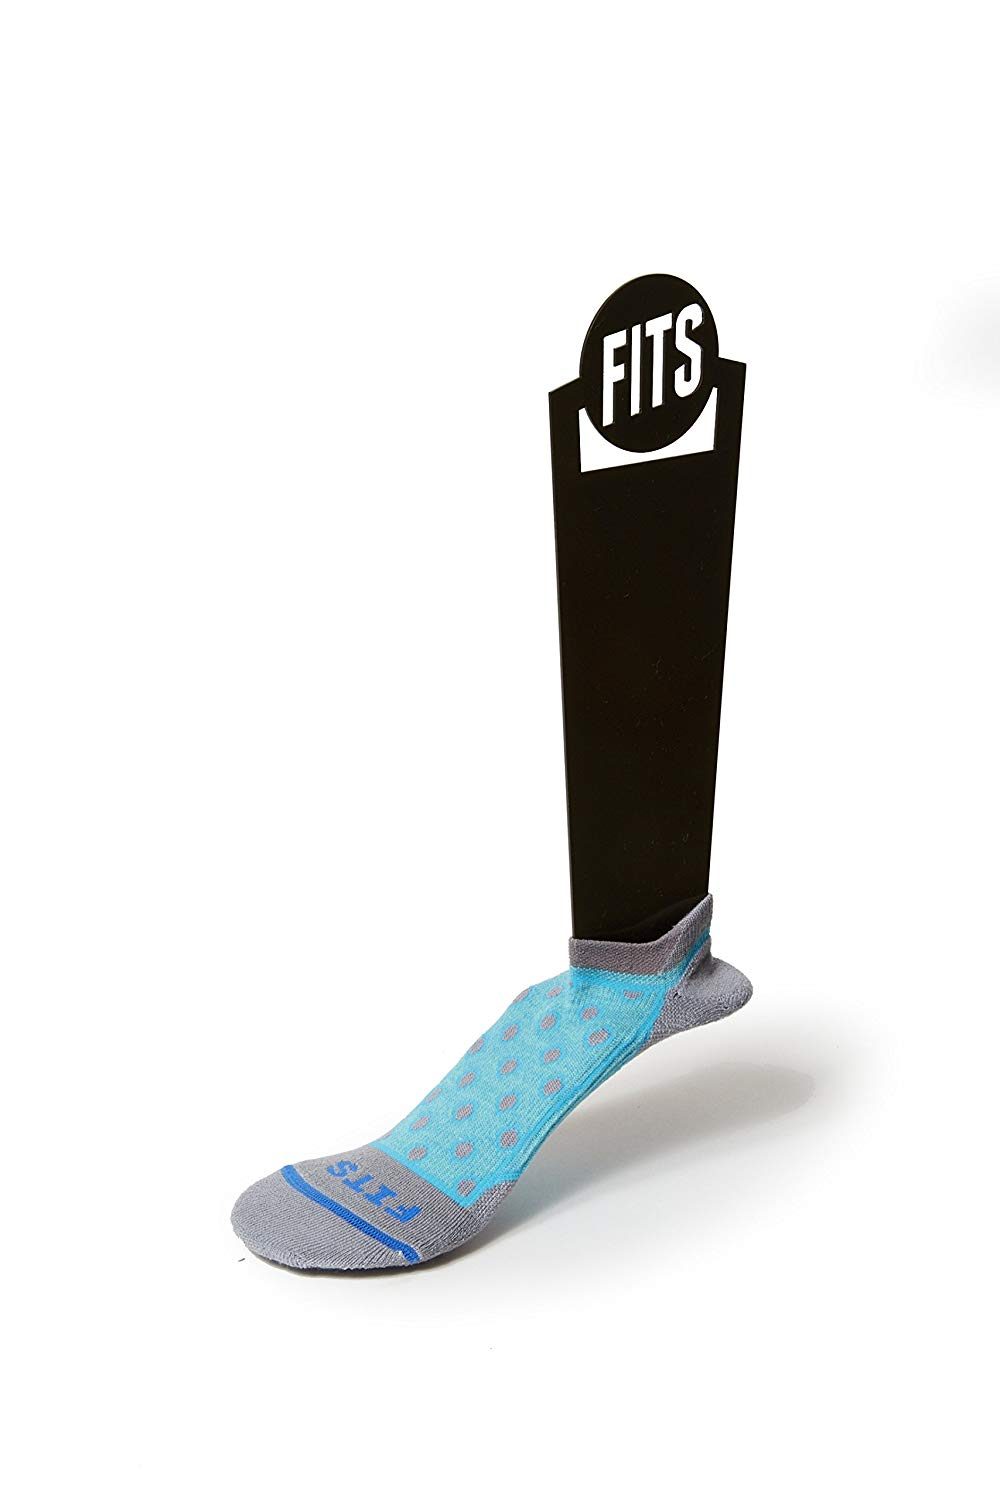 FITS socks